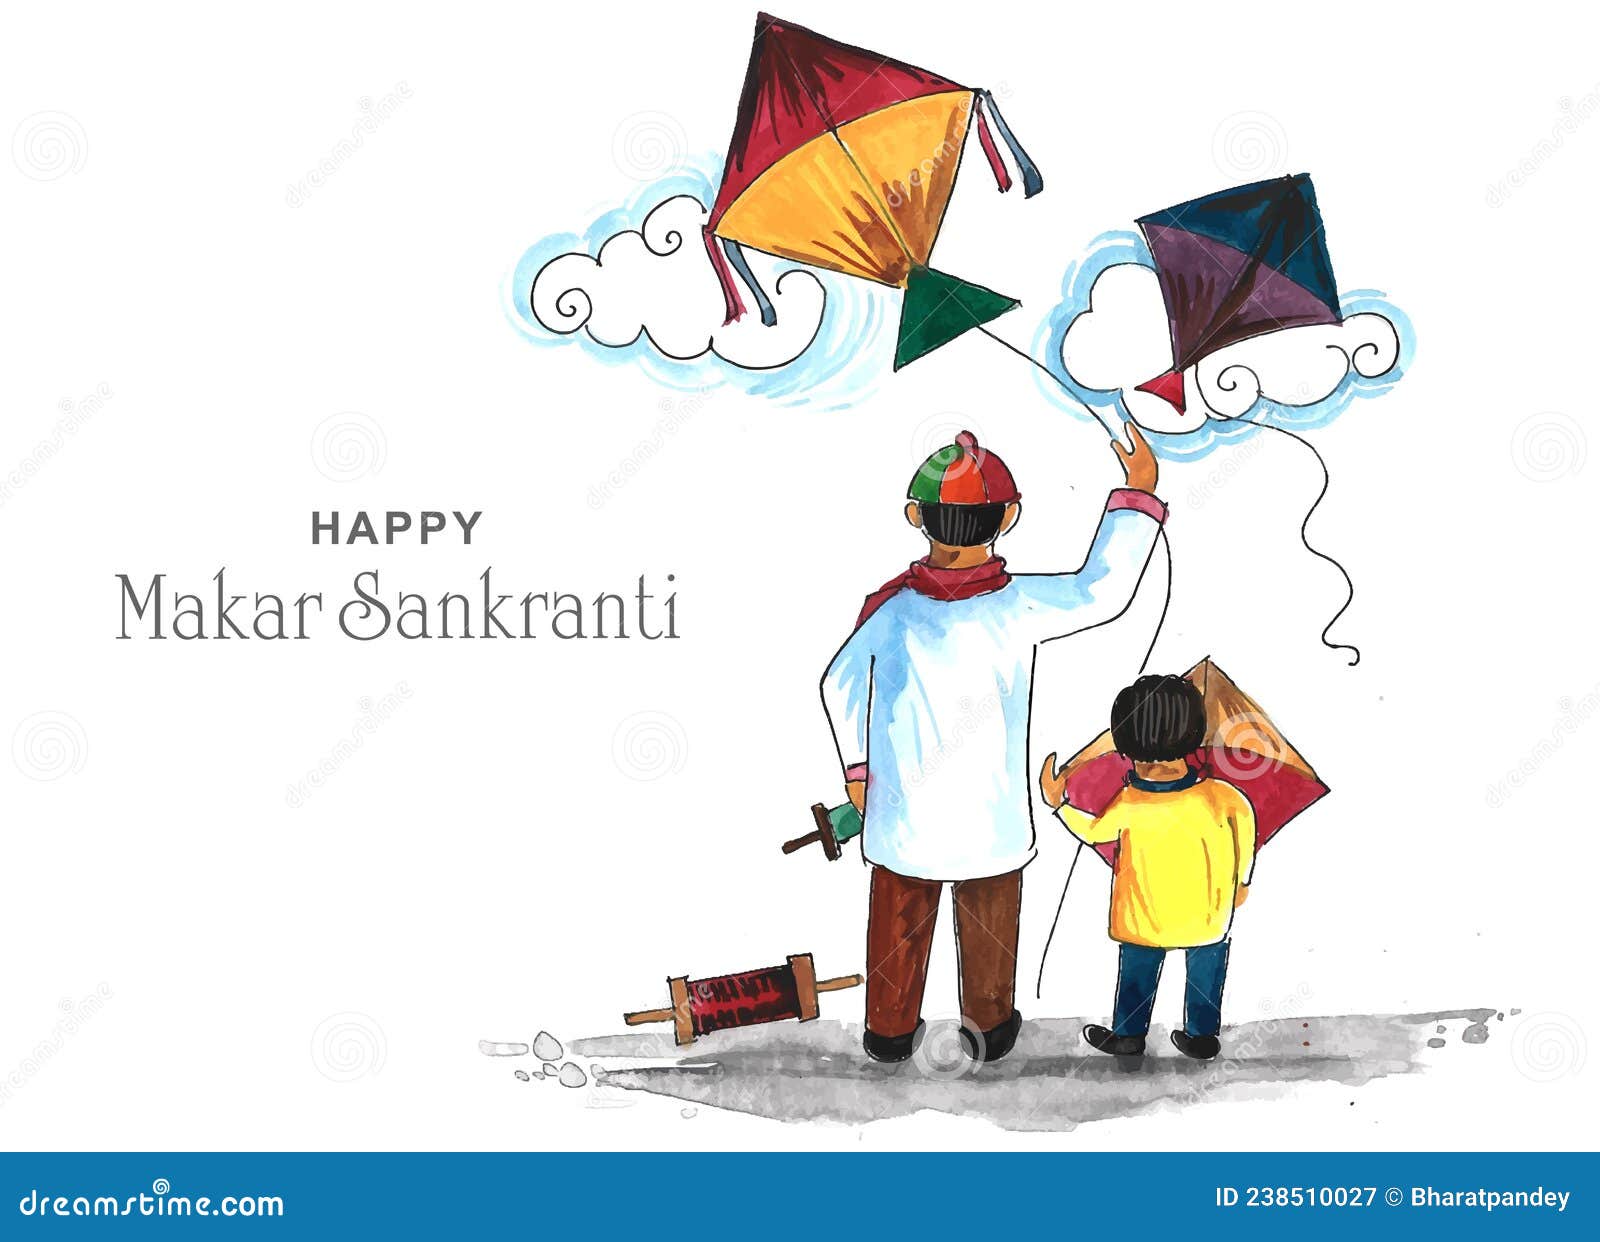 How to draw Kites - Makar Sankranti